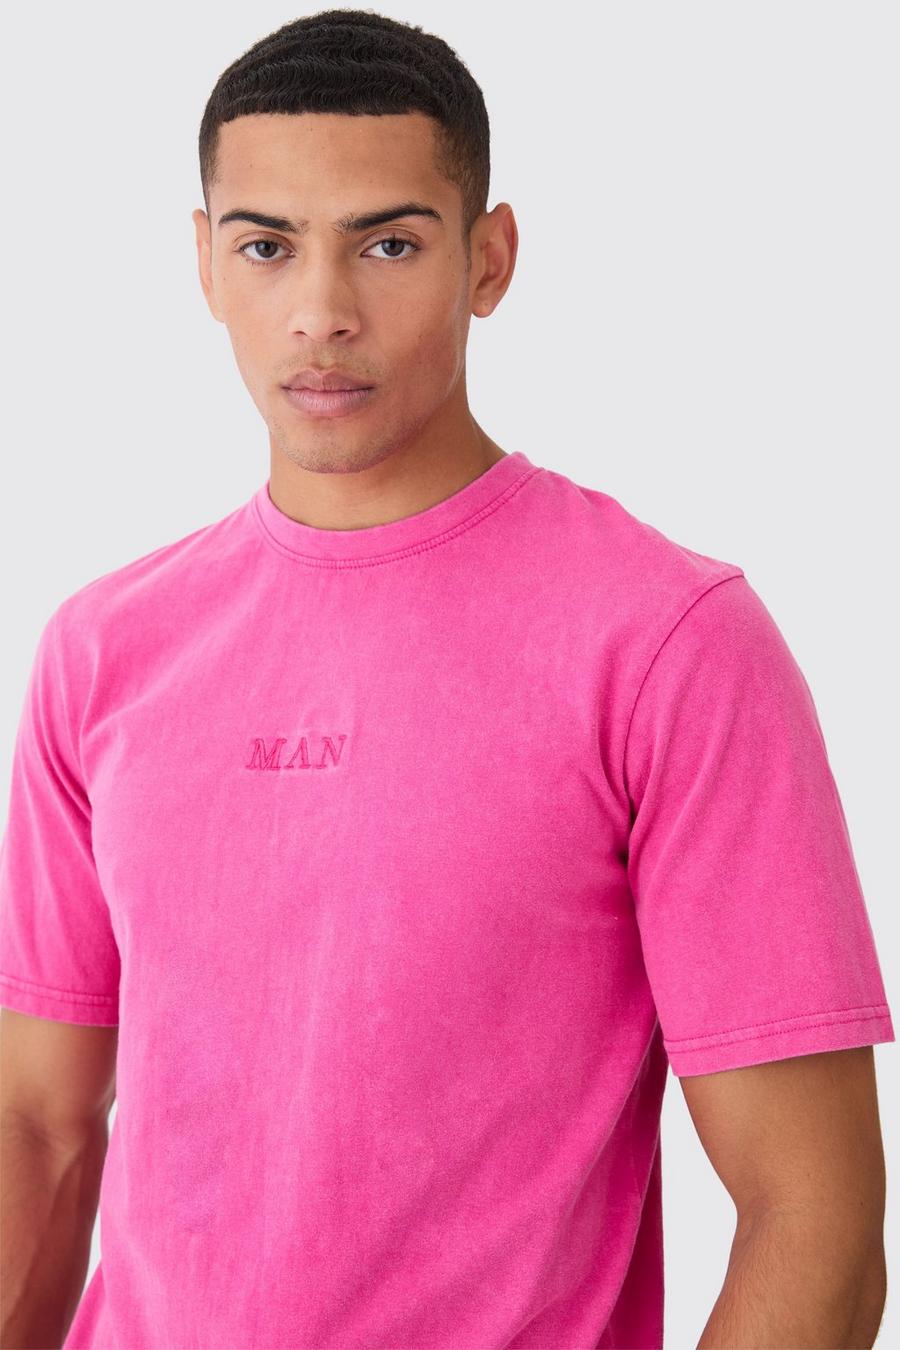 Man Roman Rundhals T-Shirt, Pink